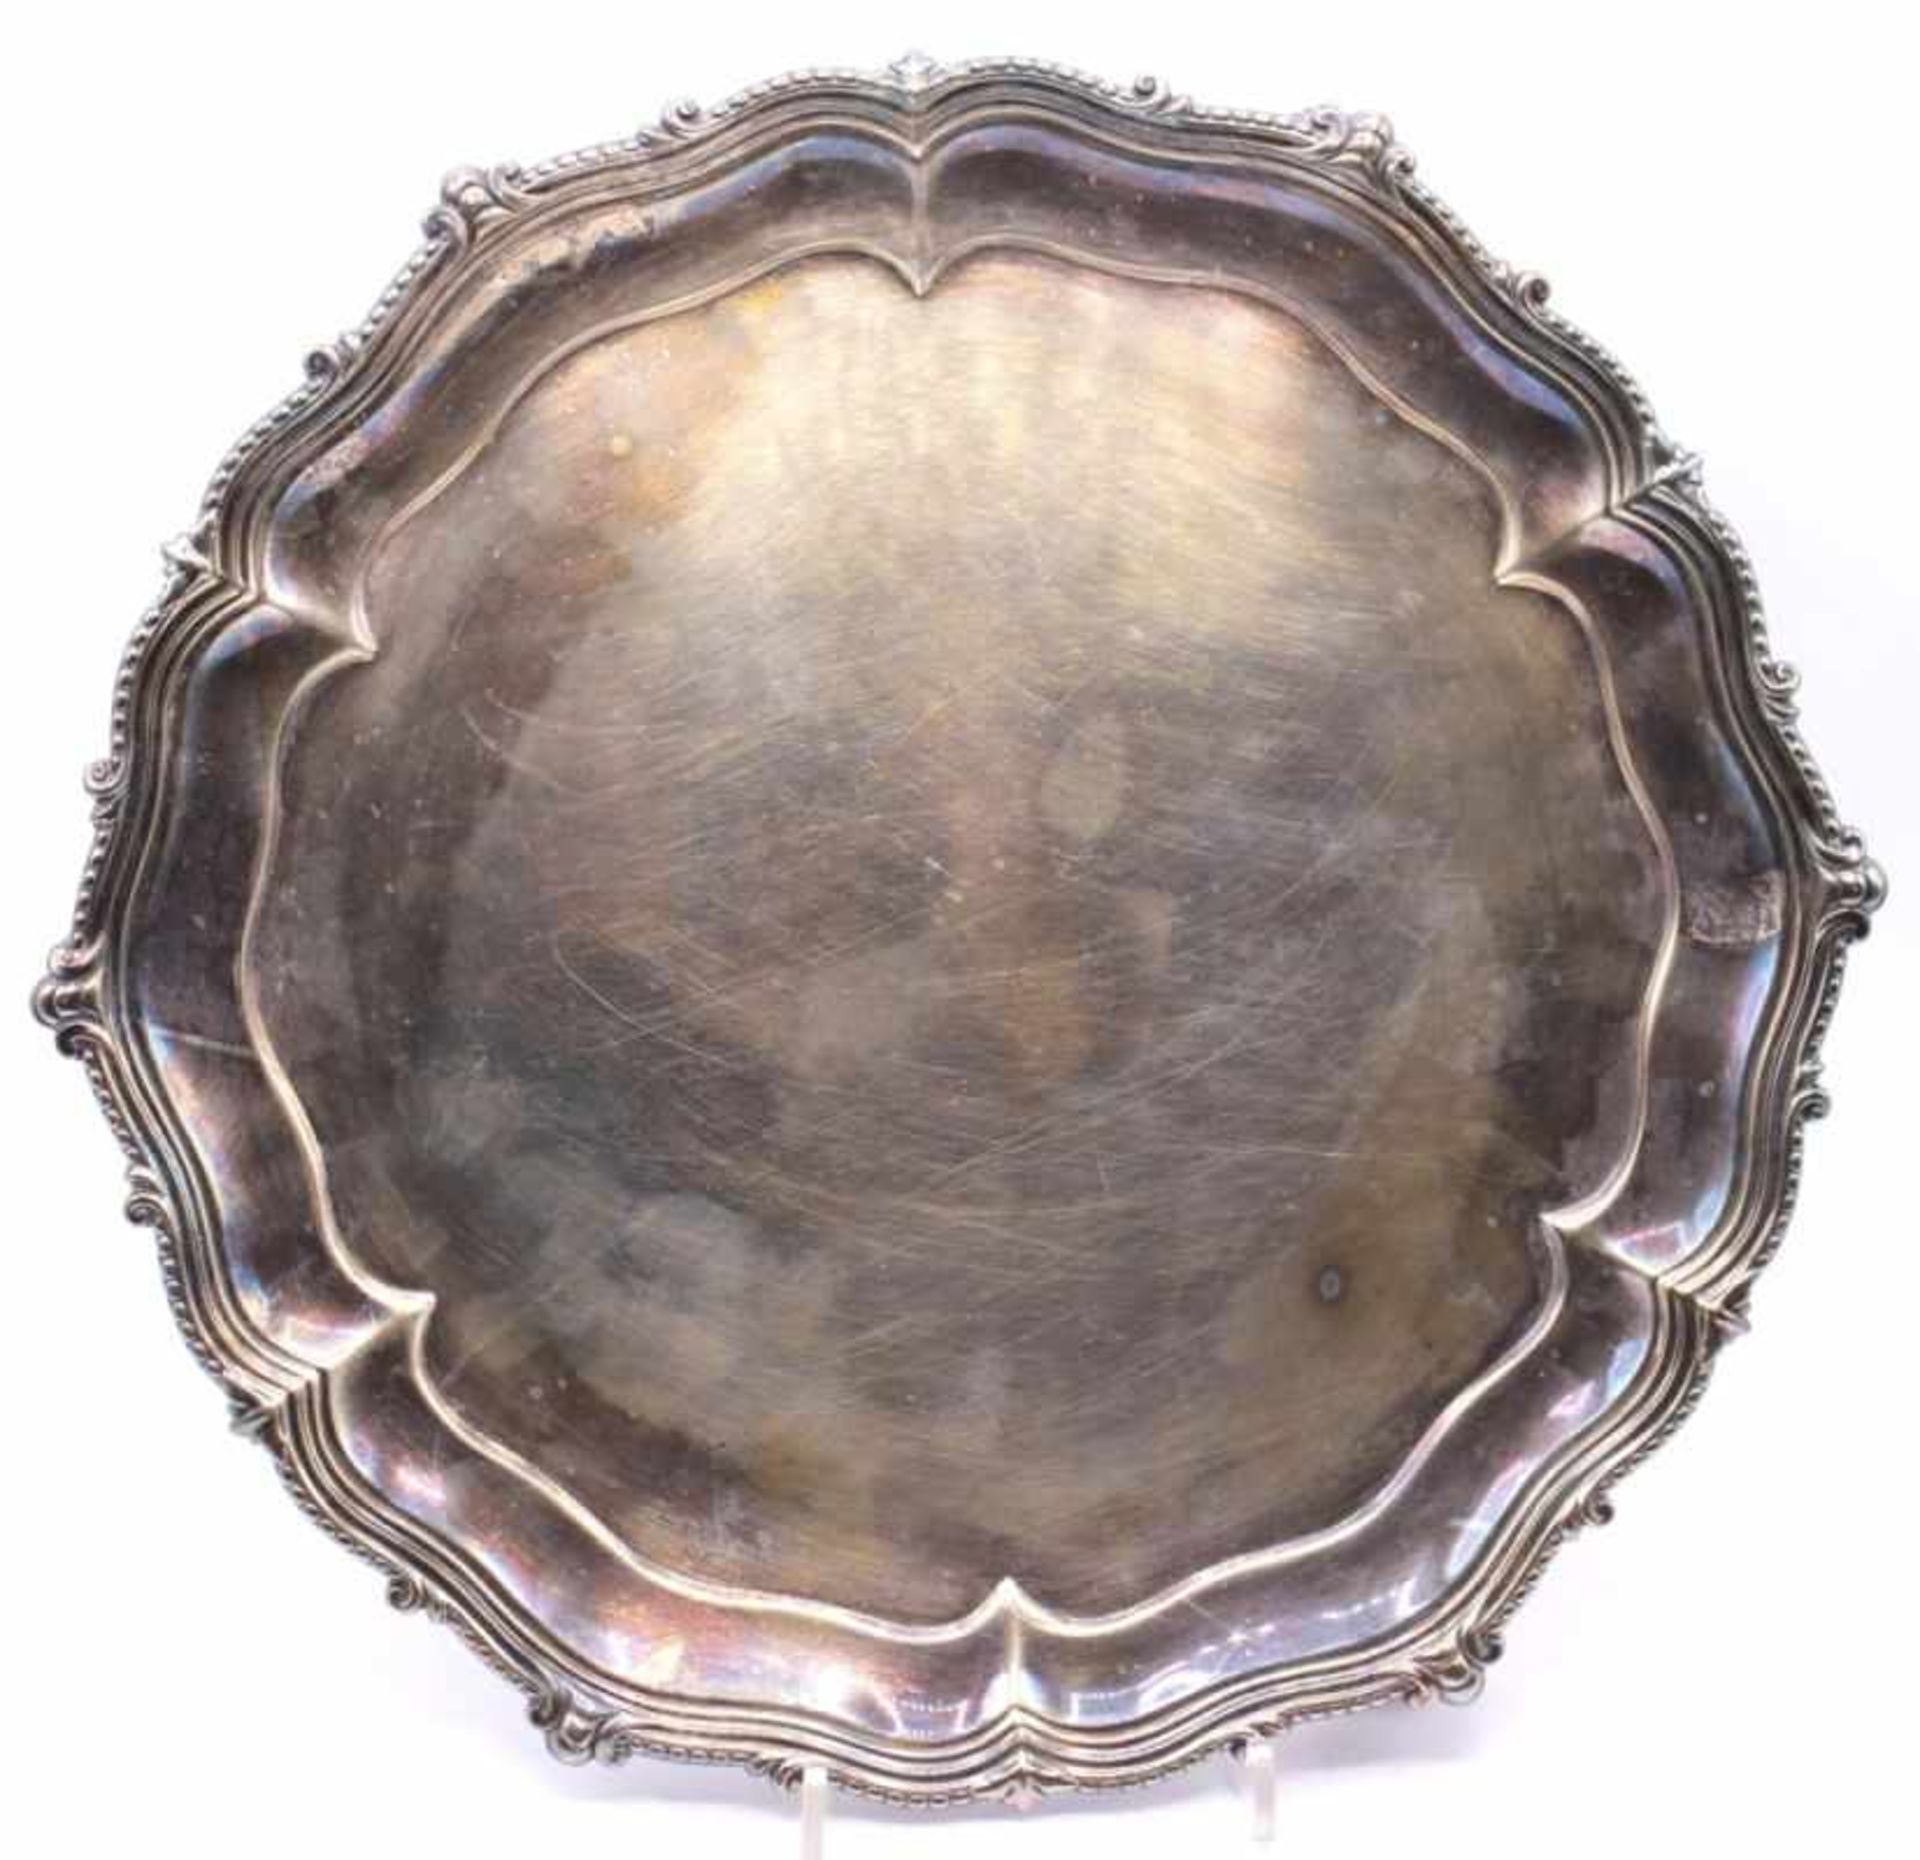 Silbertablett - London / England 1870 Sterling Silber, Meistermarke undeutlich (?JBJW), runde Platte